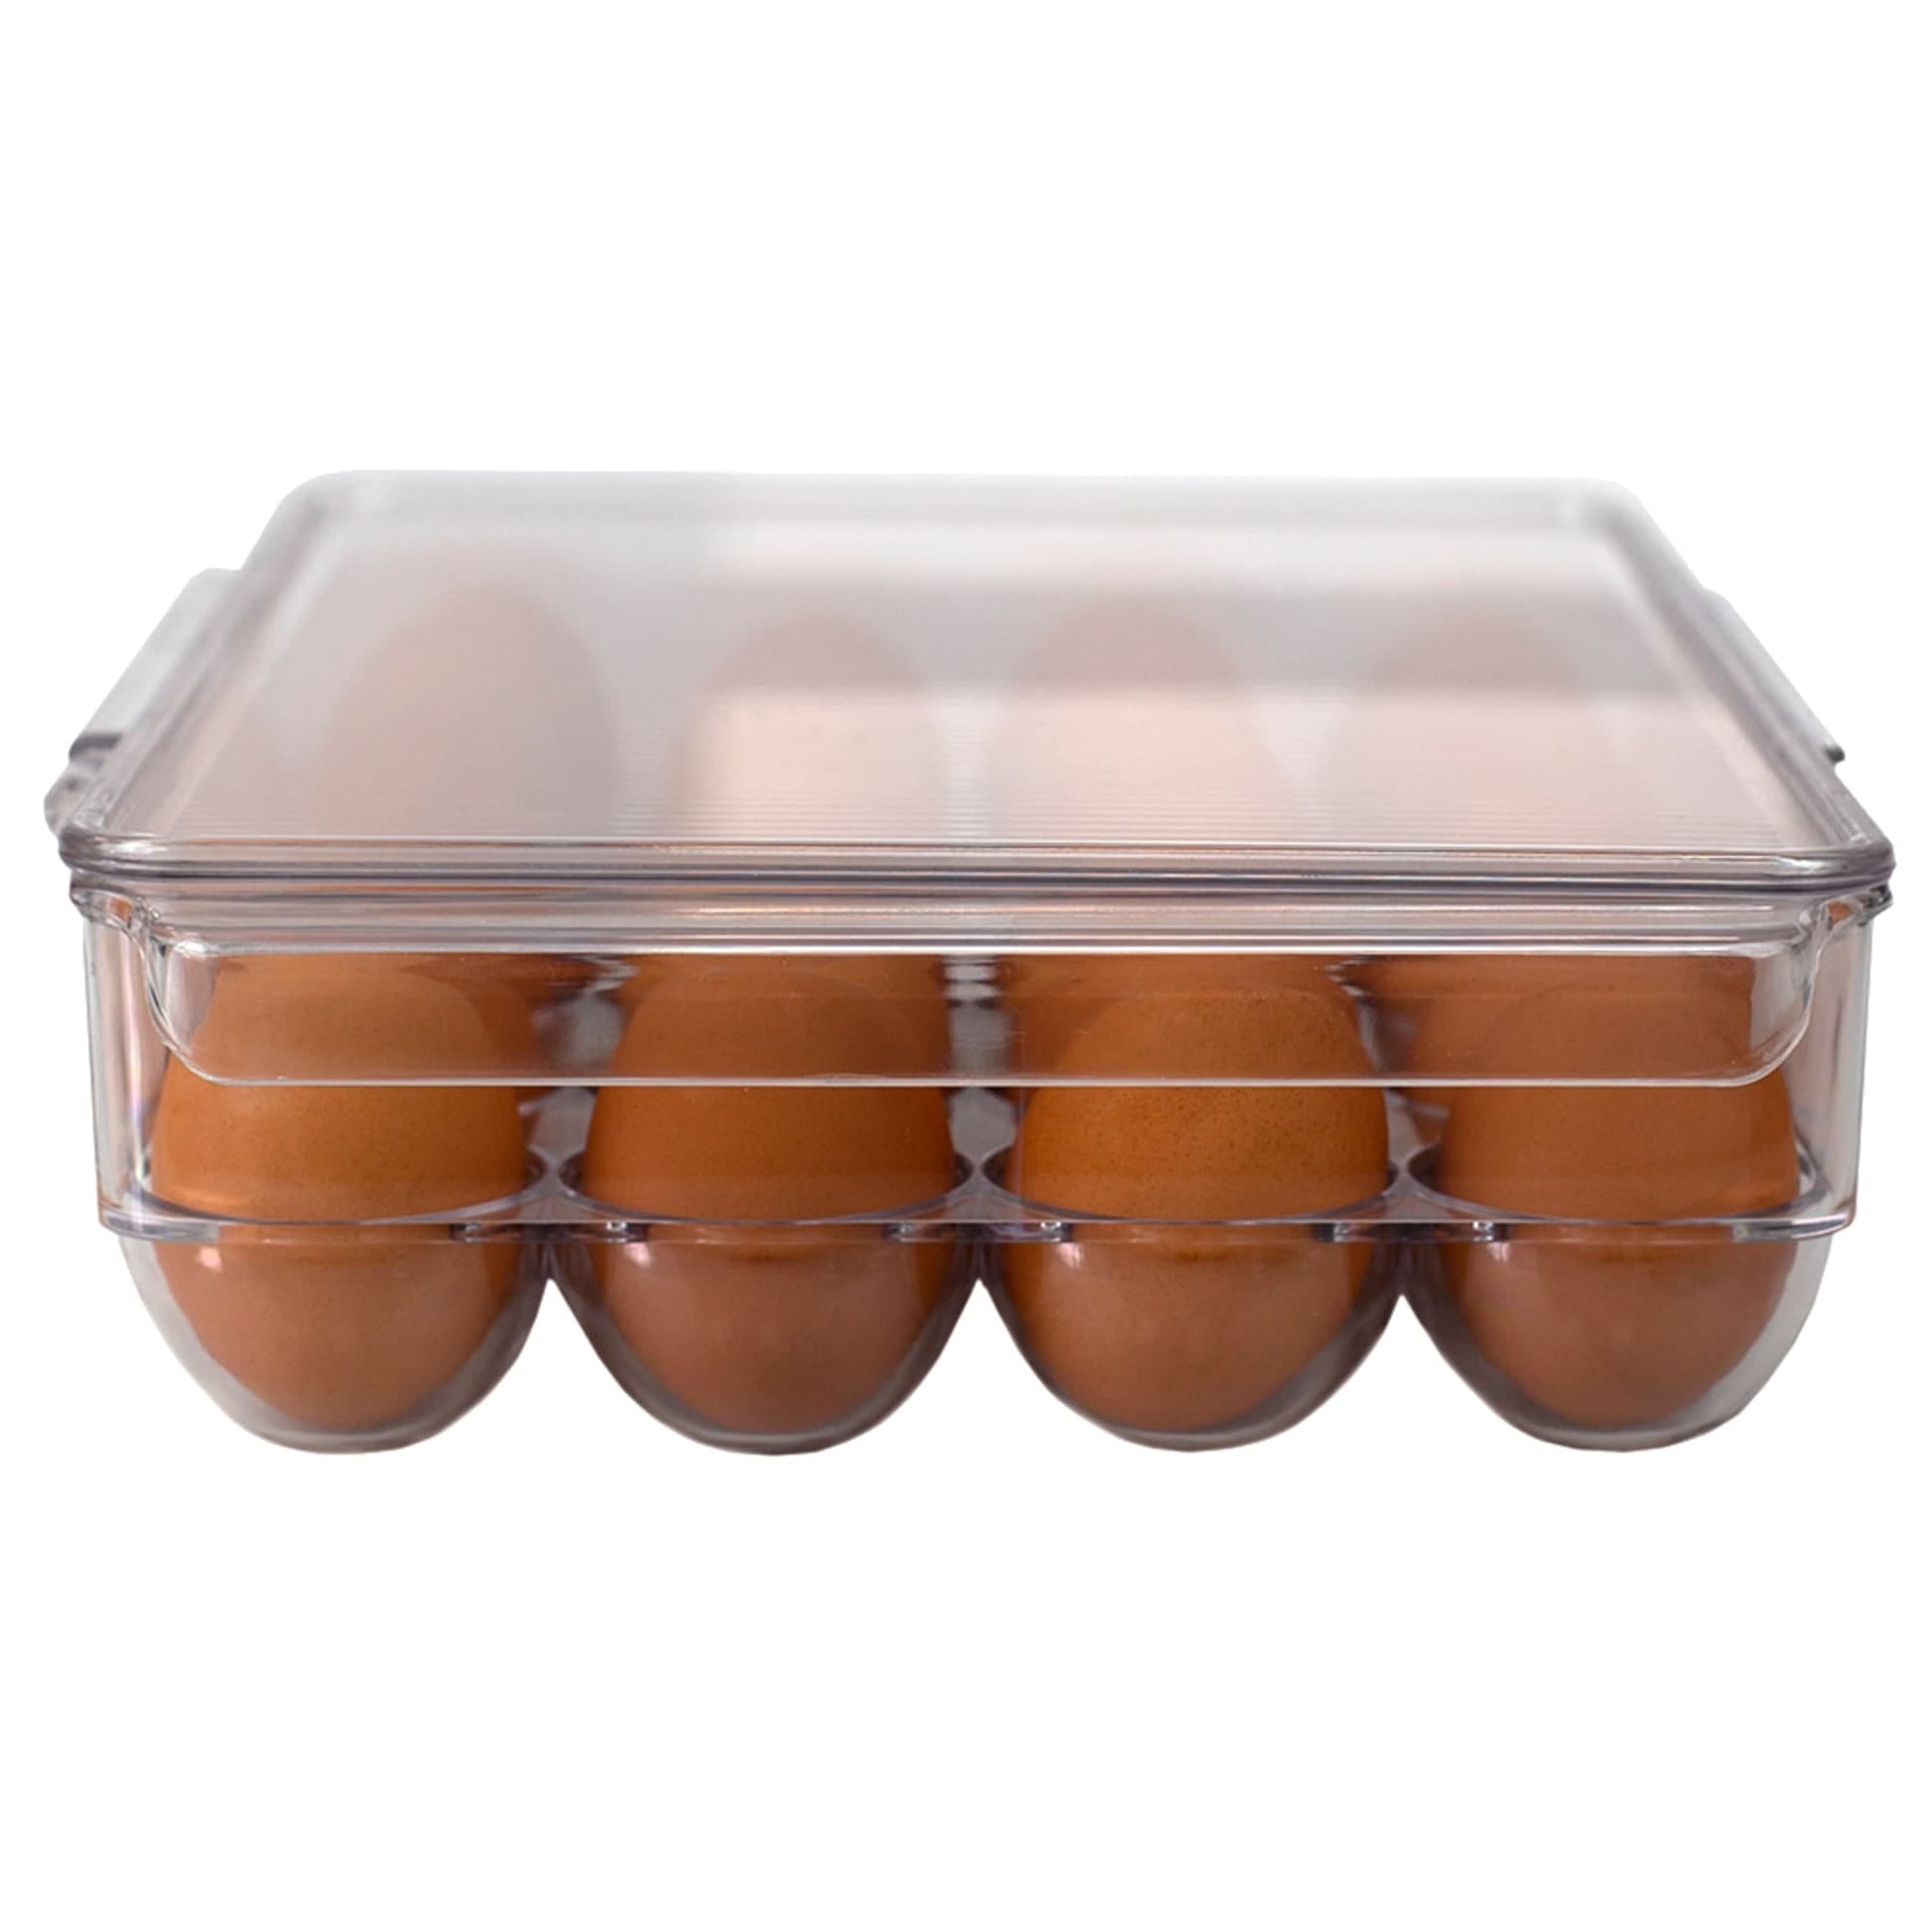 24Pcs Plastic Egg Cartons Clear Chicken Egg Tray Holder for Family